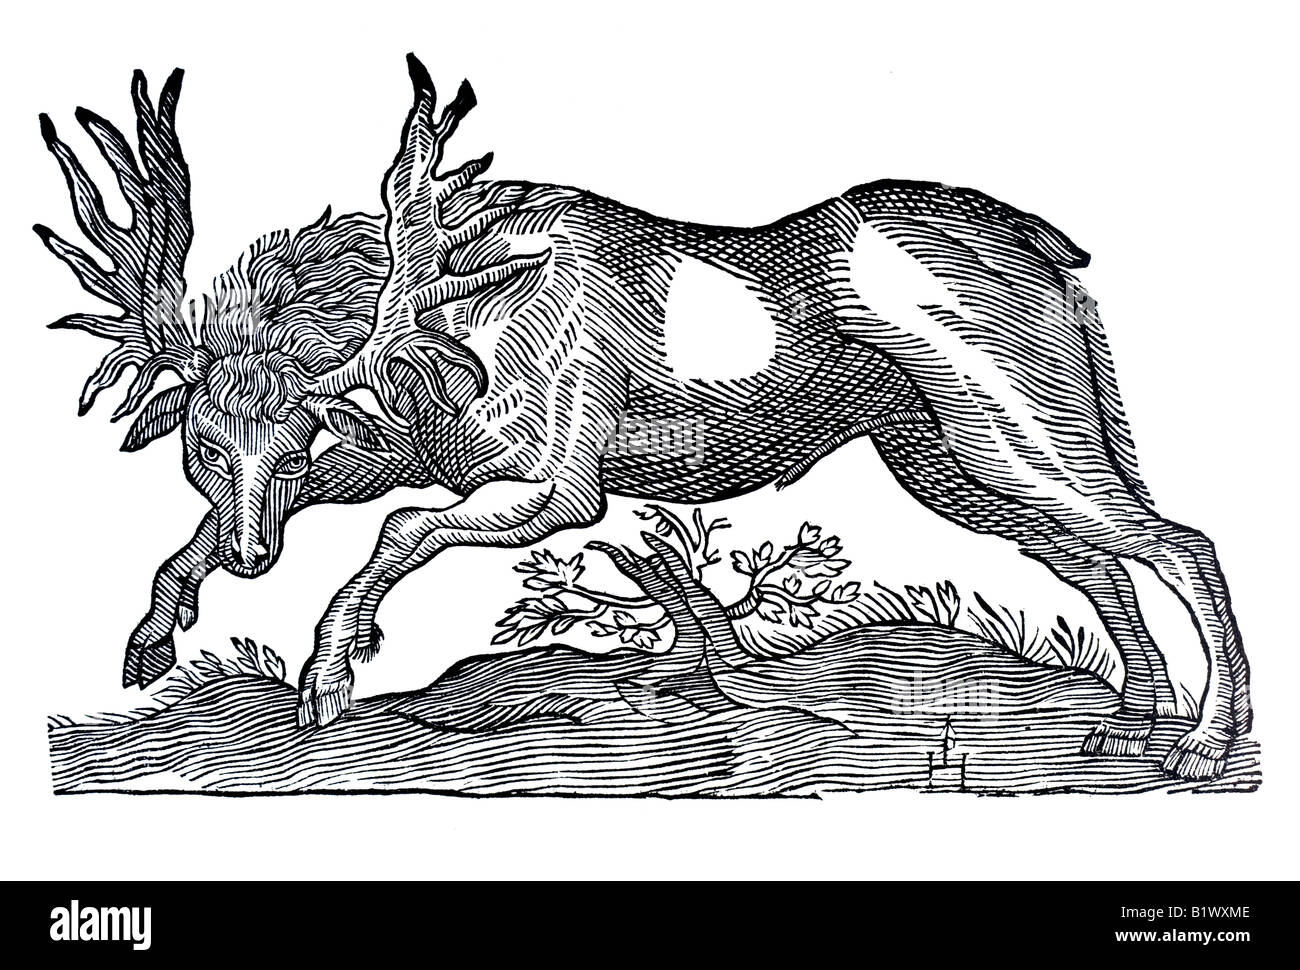 Von dem Elend, Alces, Historia Animalum, Conrad Gesner, 1551, 16th century, renaissance, Europe Stock Photo